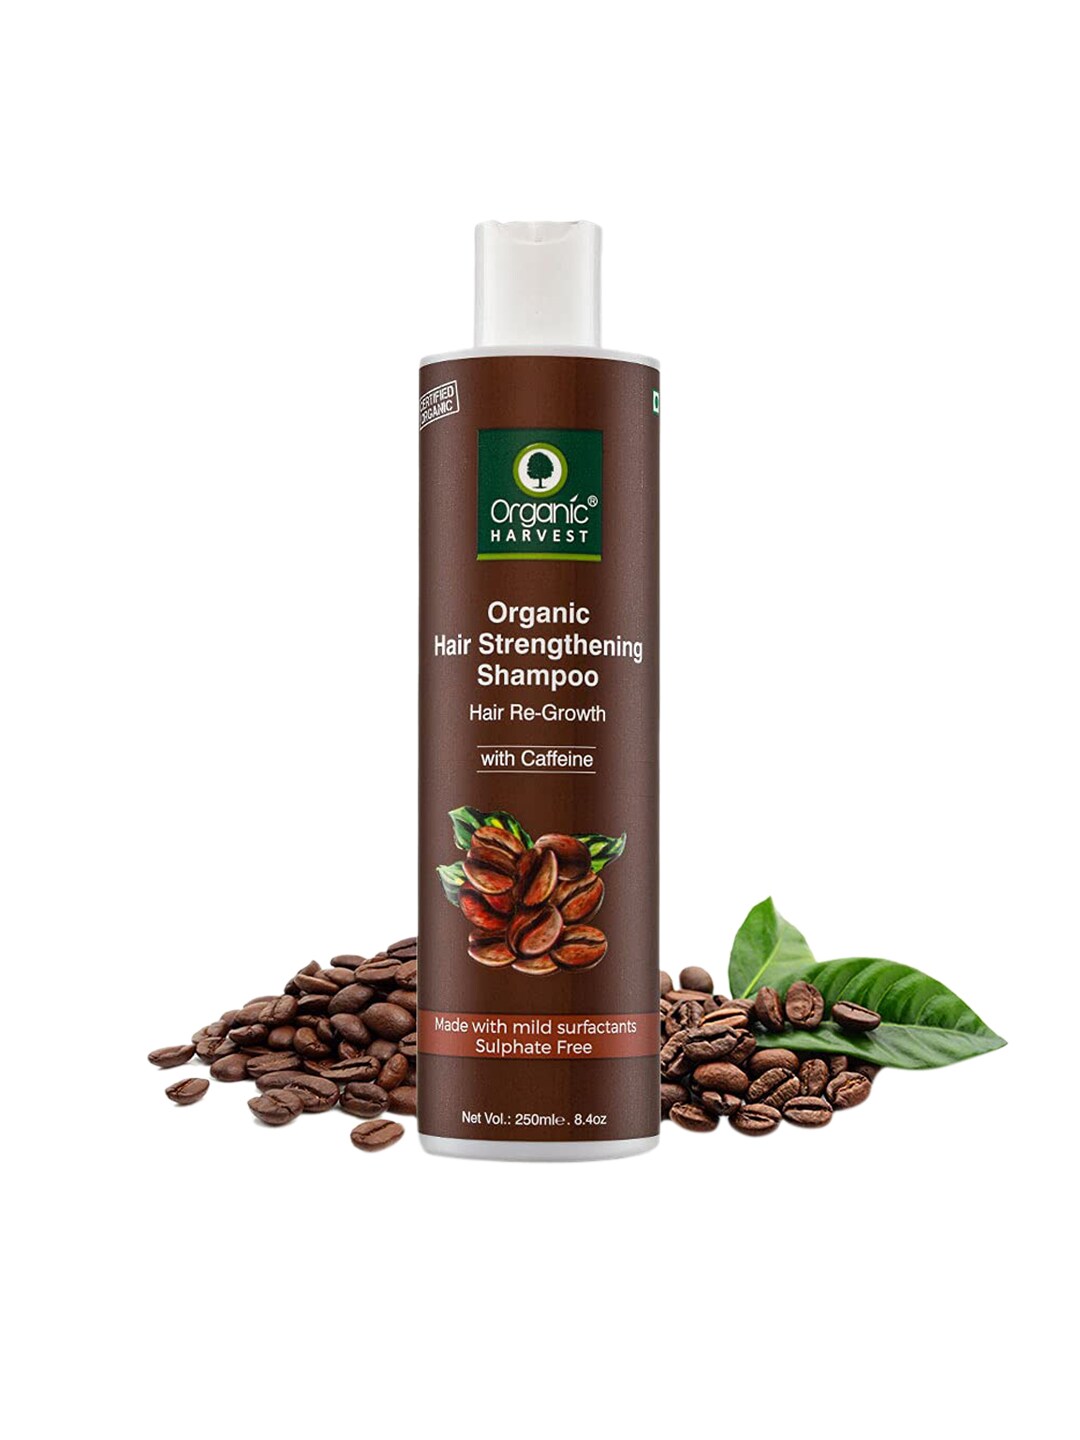 Organic Harvest Hair Strengthening Shampoo-250ml Price in India